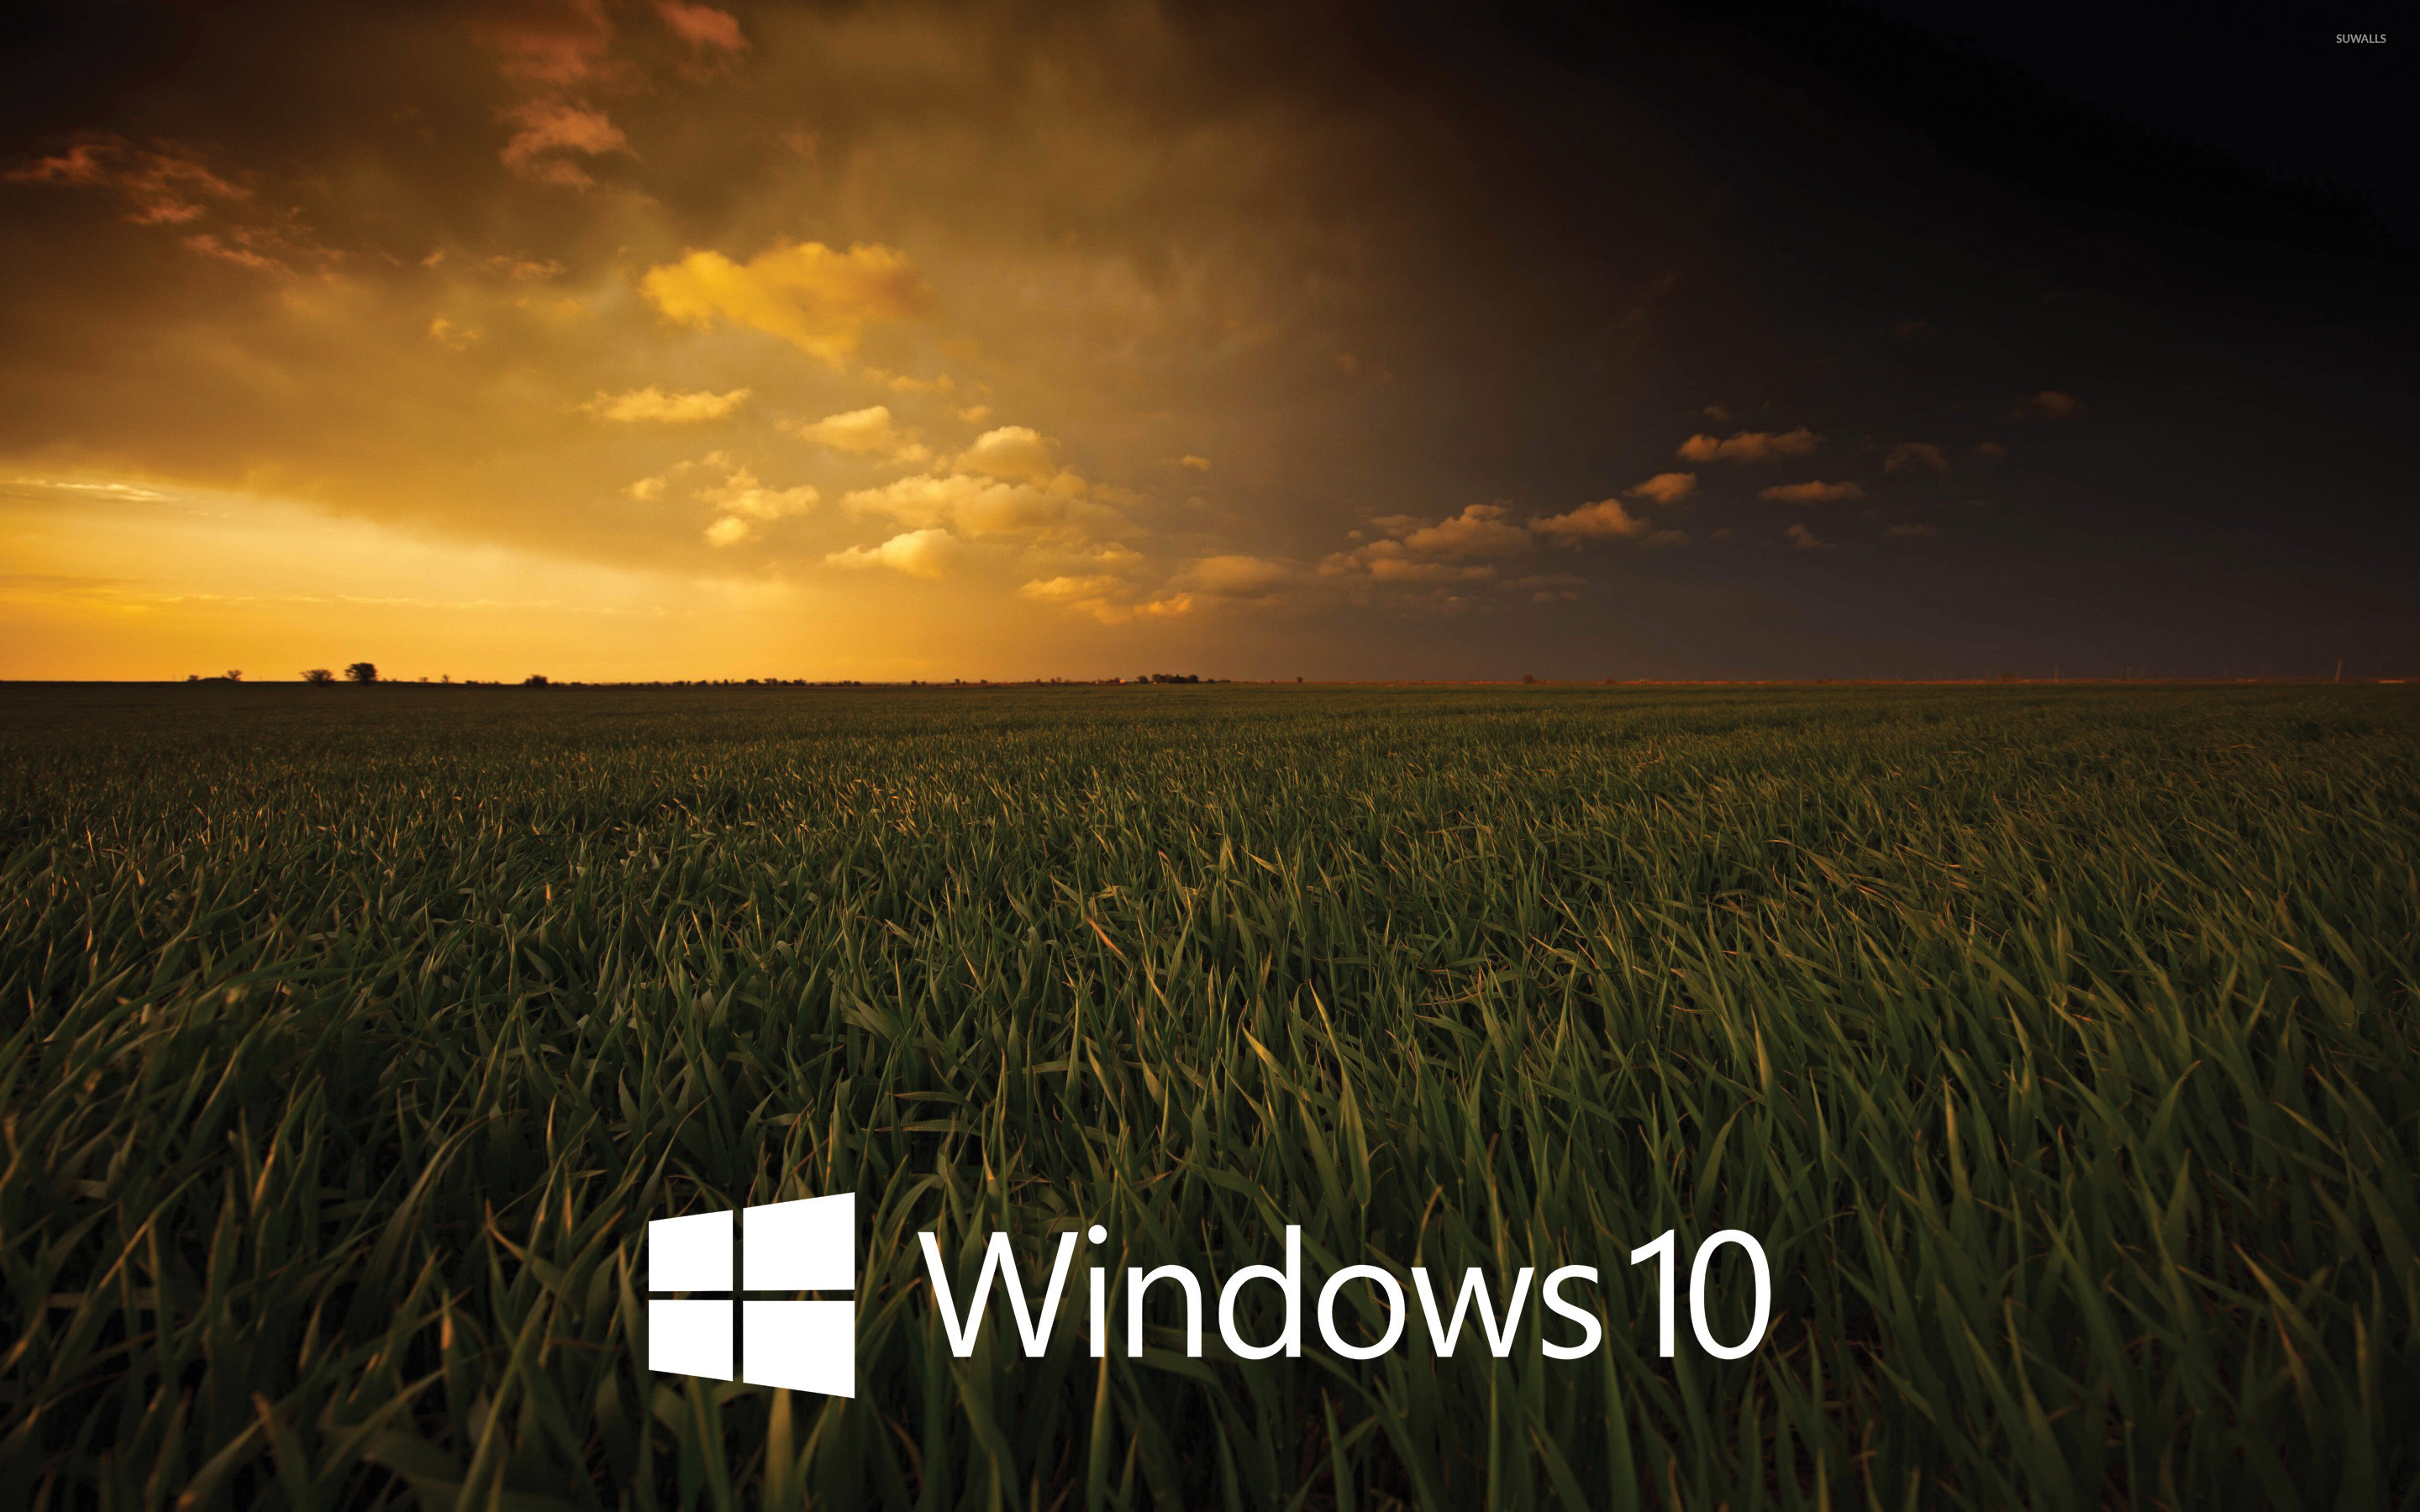 2880x1800 Windows 10 white text logo on the dark field wallpaper  jpg